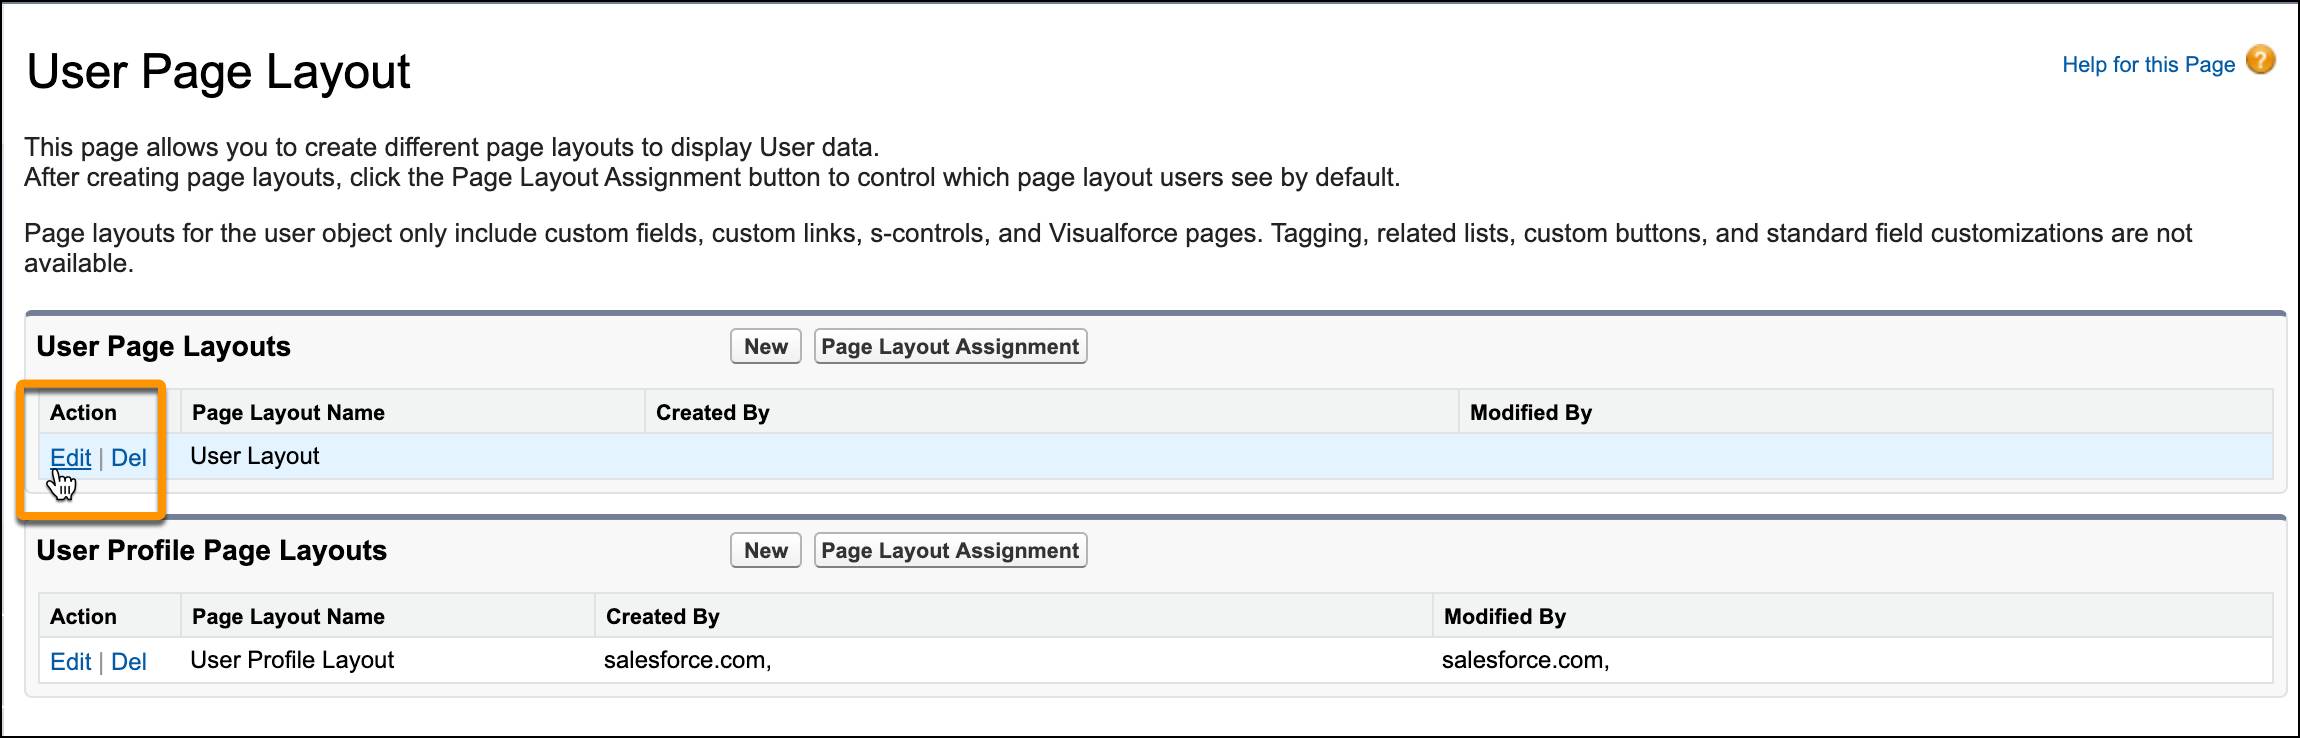 User Page Layout(사용자 페이지 레이아웃)에 대한 Edit(편집) 링크에 커서가 있는 사용자 페이지 레이아웃 화면.